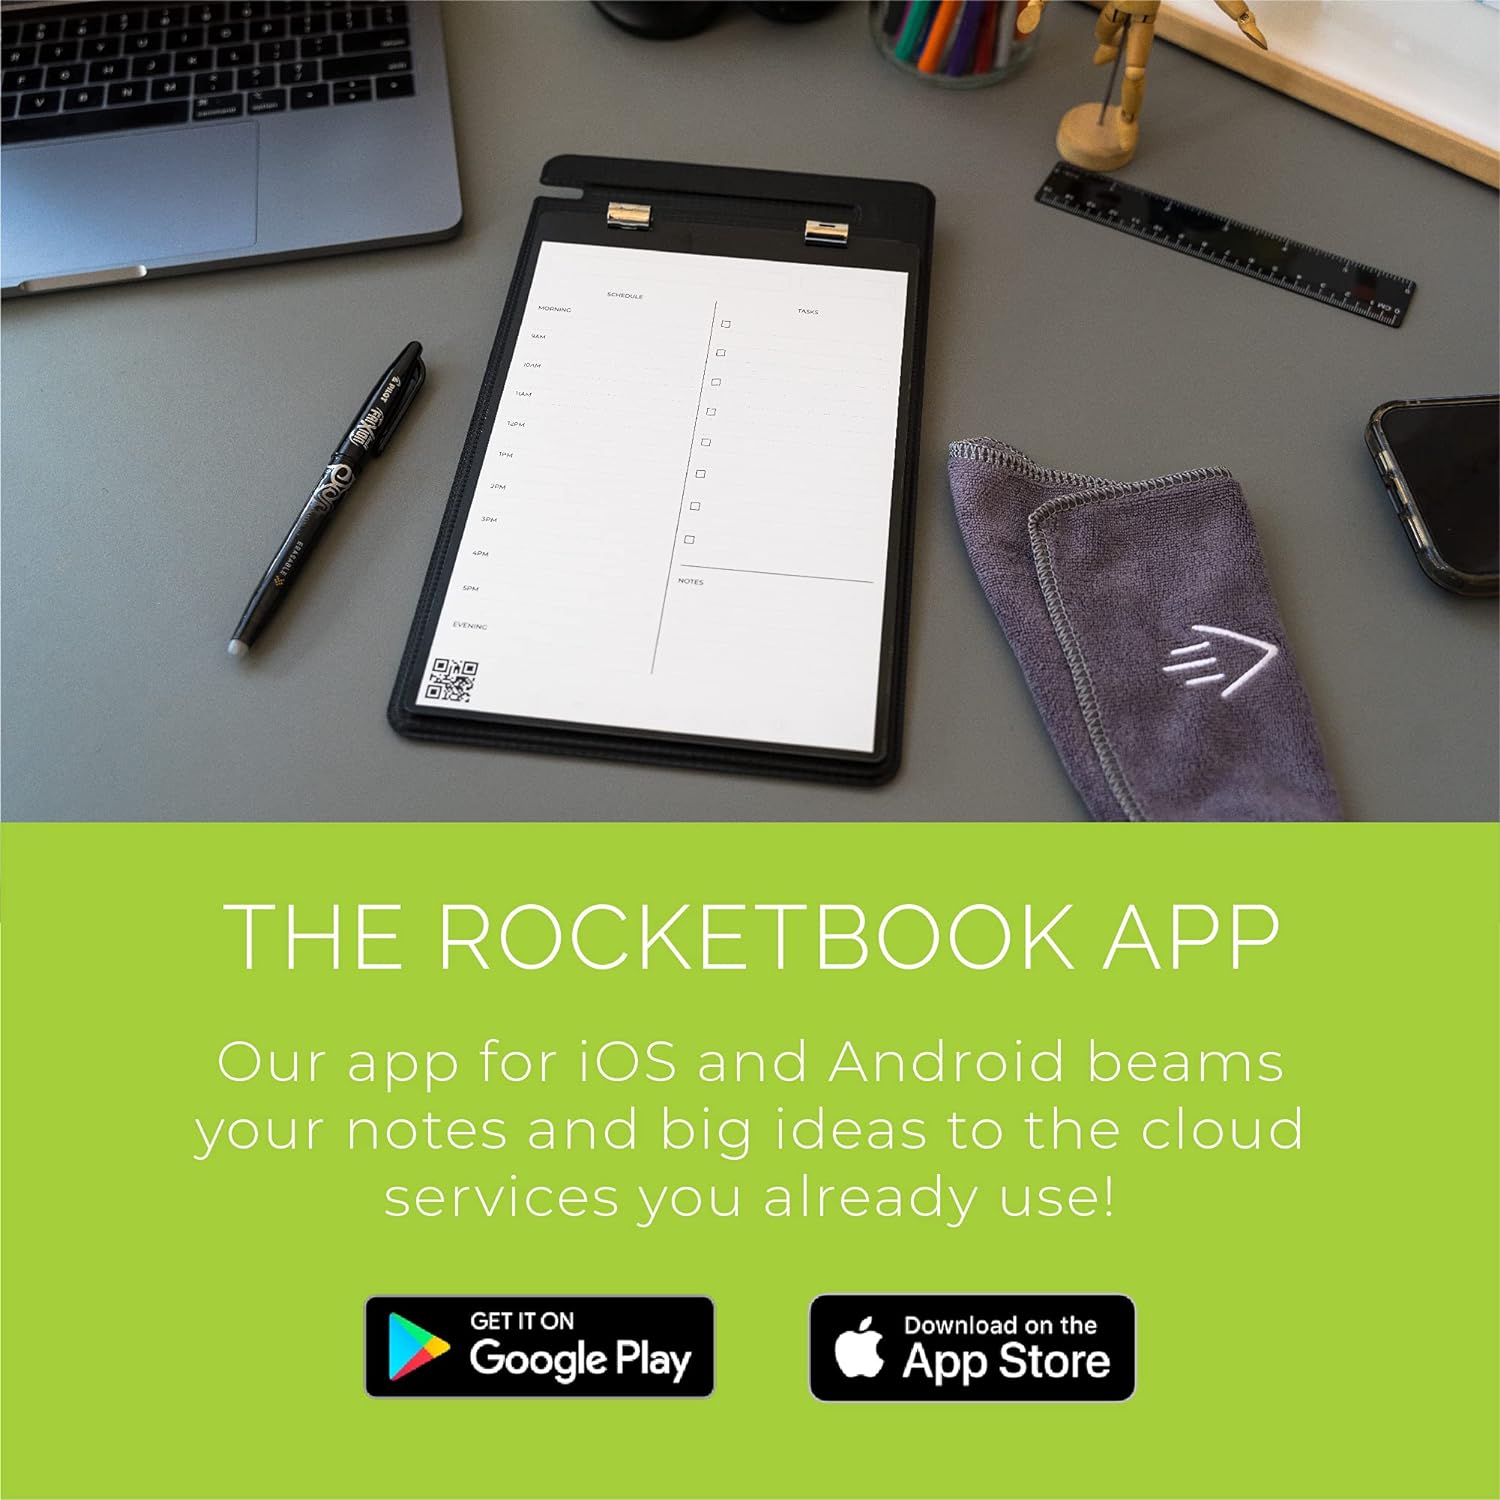 Rocketbook Orbit Legal Pad Letter - Smart Reusable Legal Pad - Teal, Lined\\/Dot-Grid